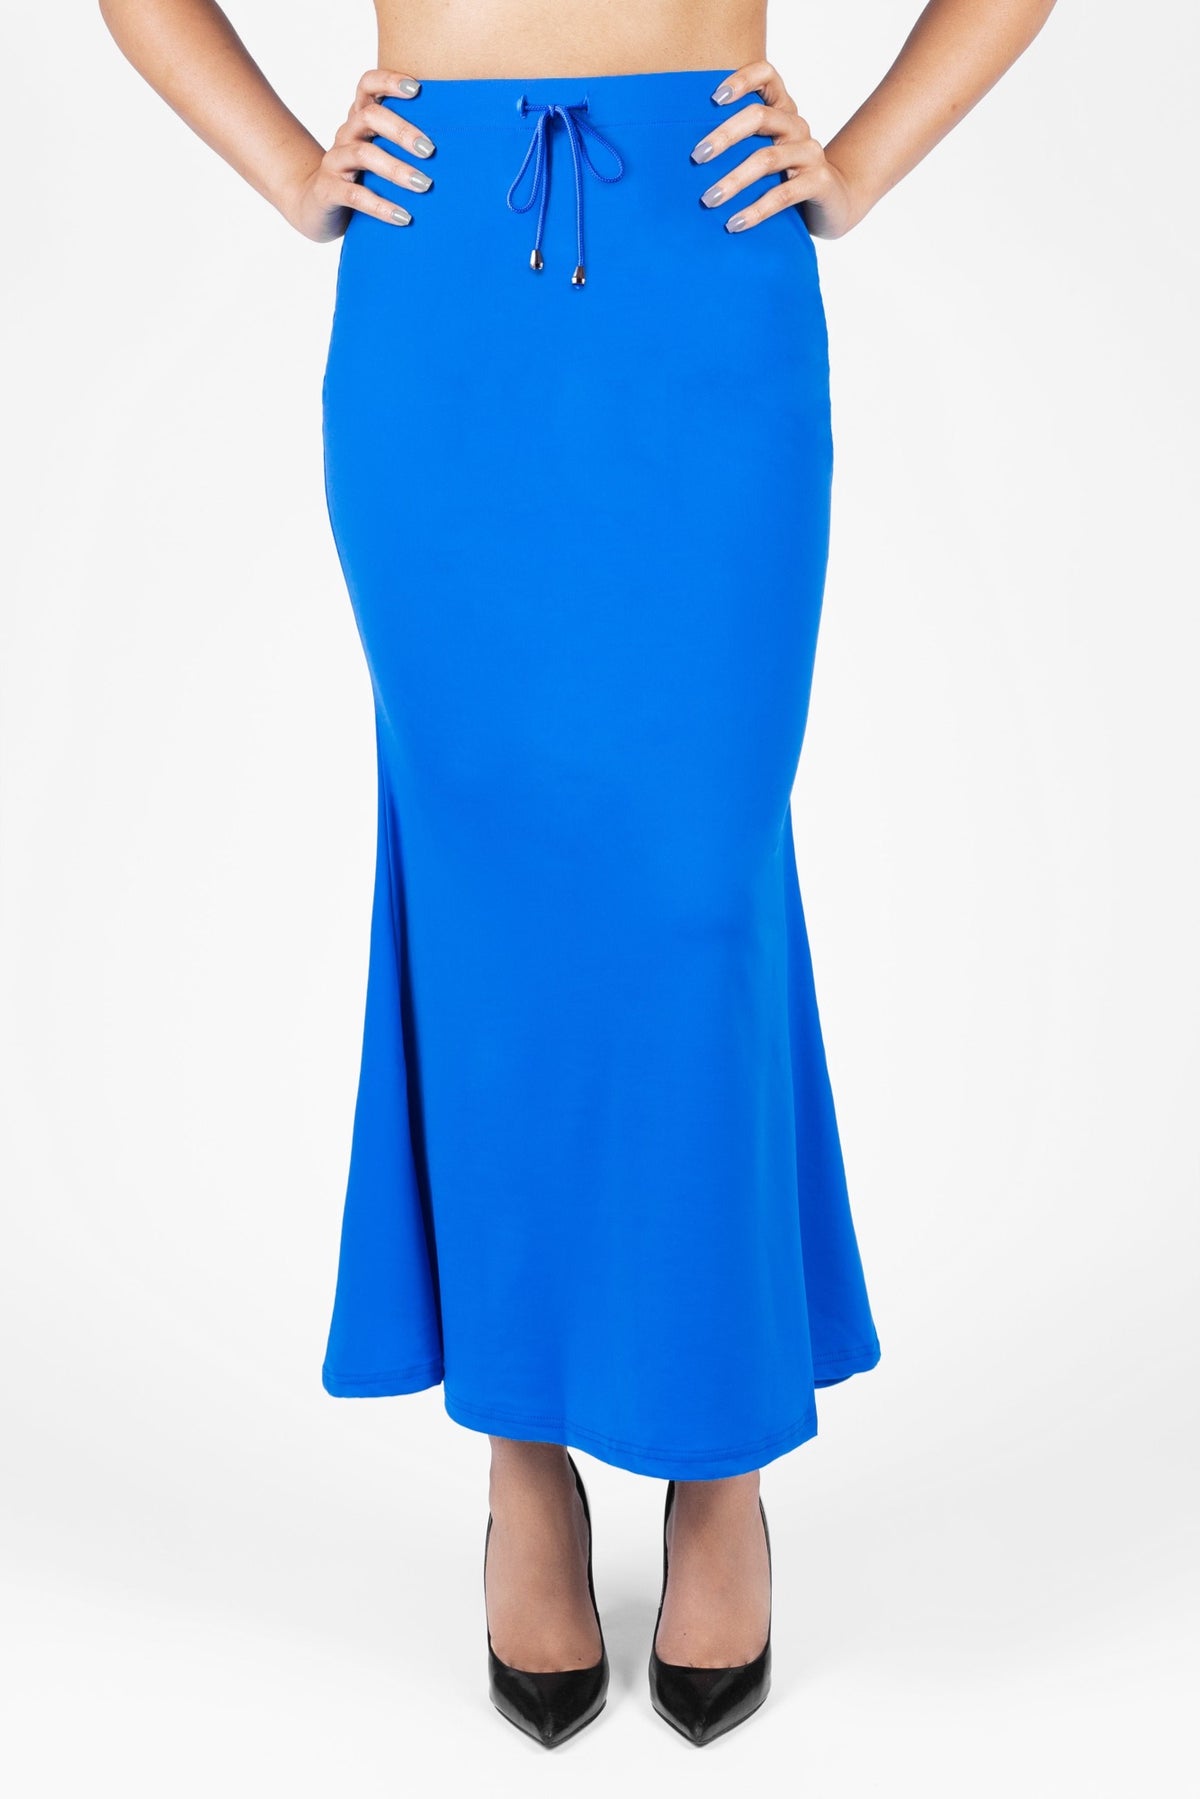 GOLDSTROMS Women Blue Solid Saree Shapewear - Absolutely